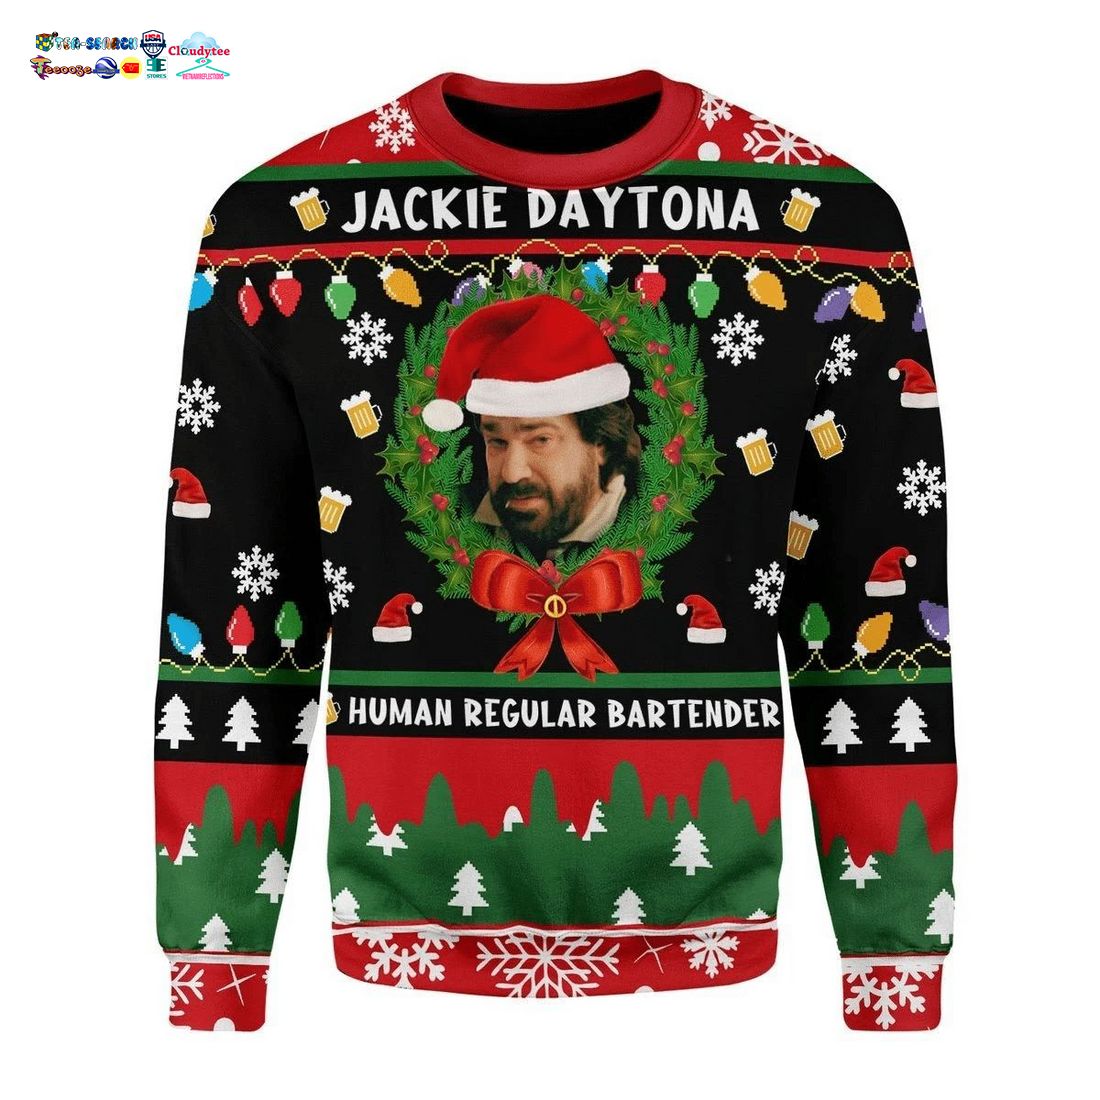 Jackie Daytona Human Regular Bartender Ugly Christmas Sweater